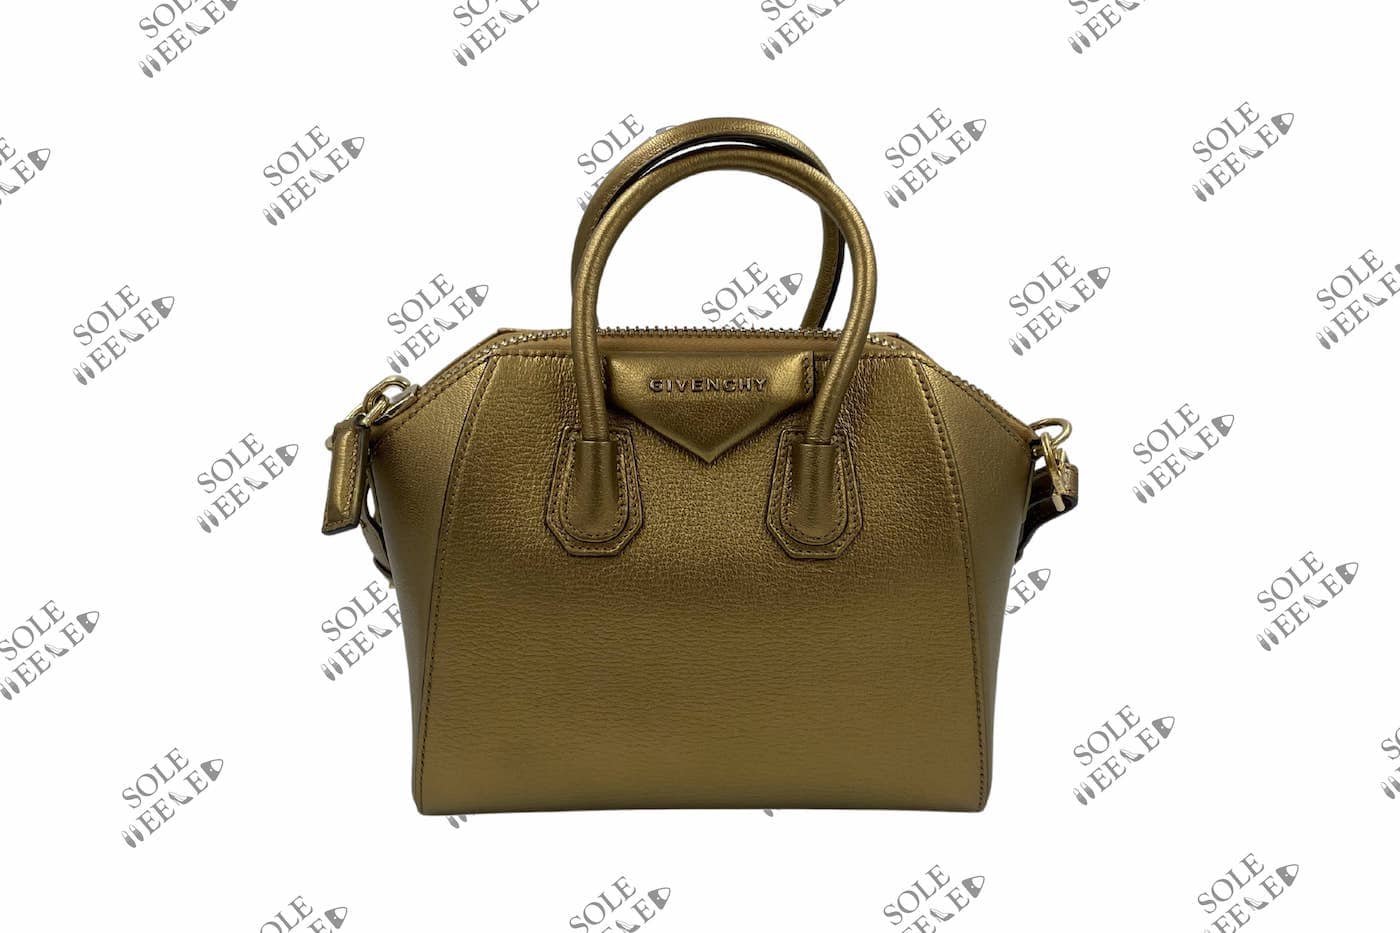 Givenchy Handbag Leather Restoration